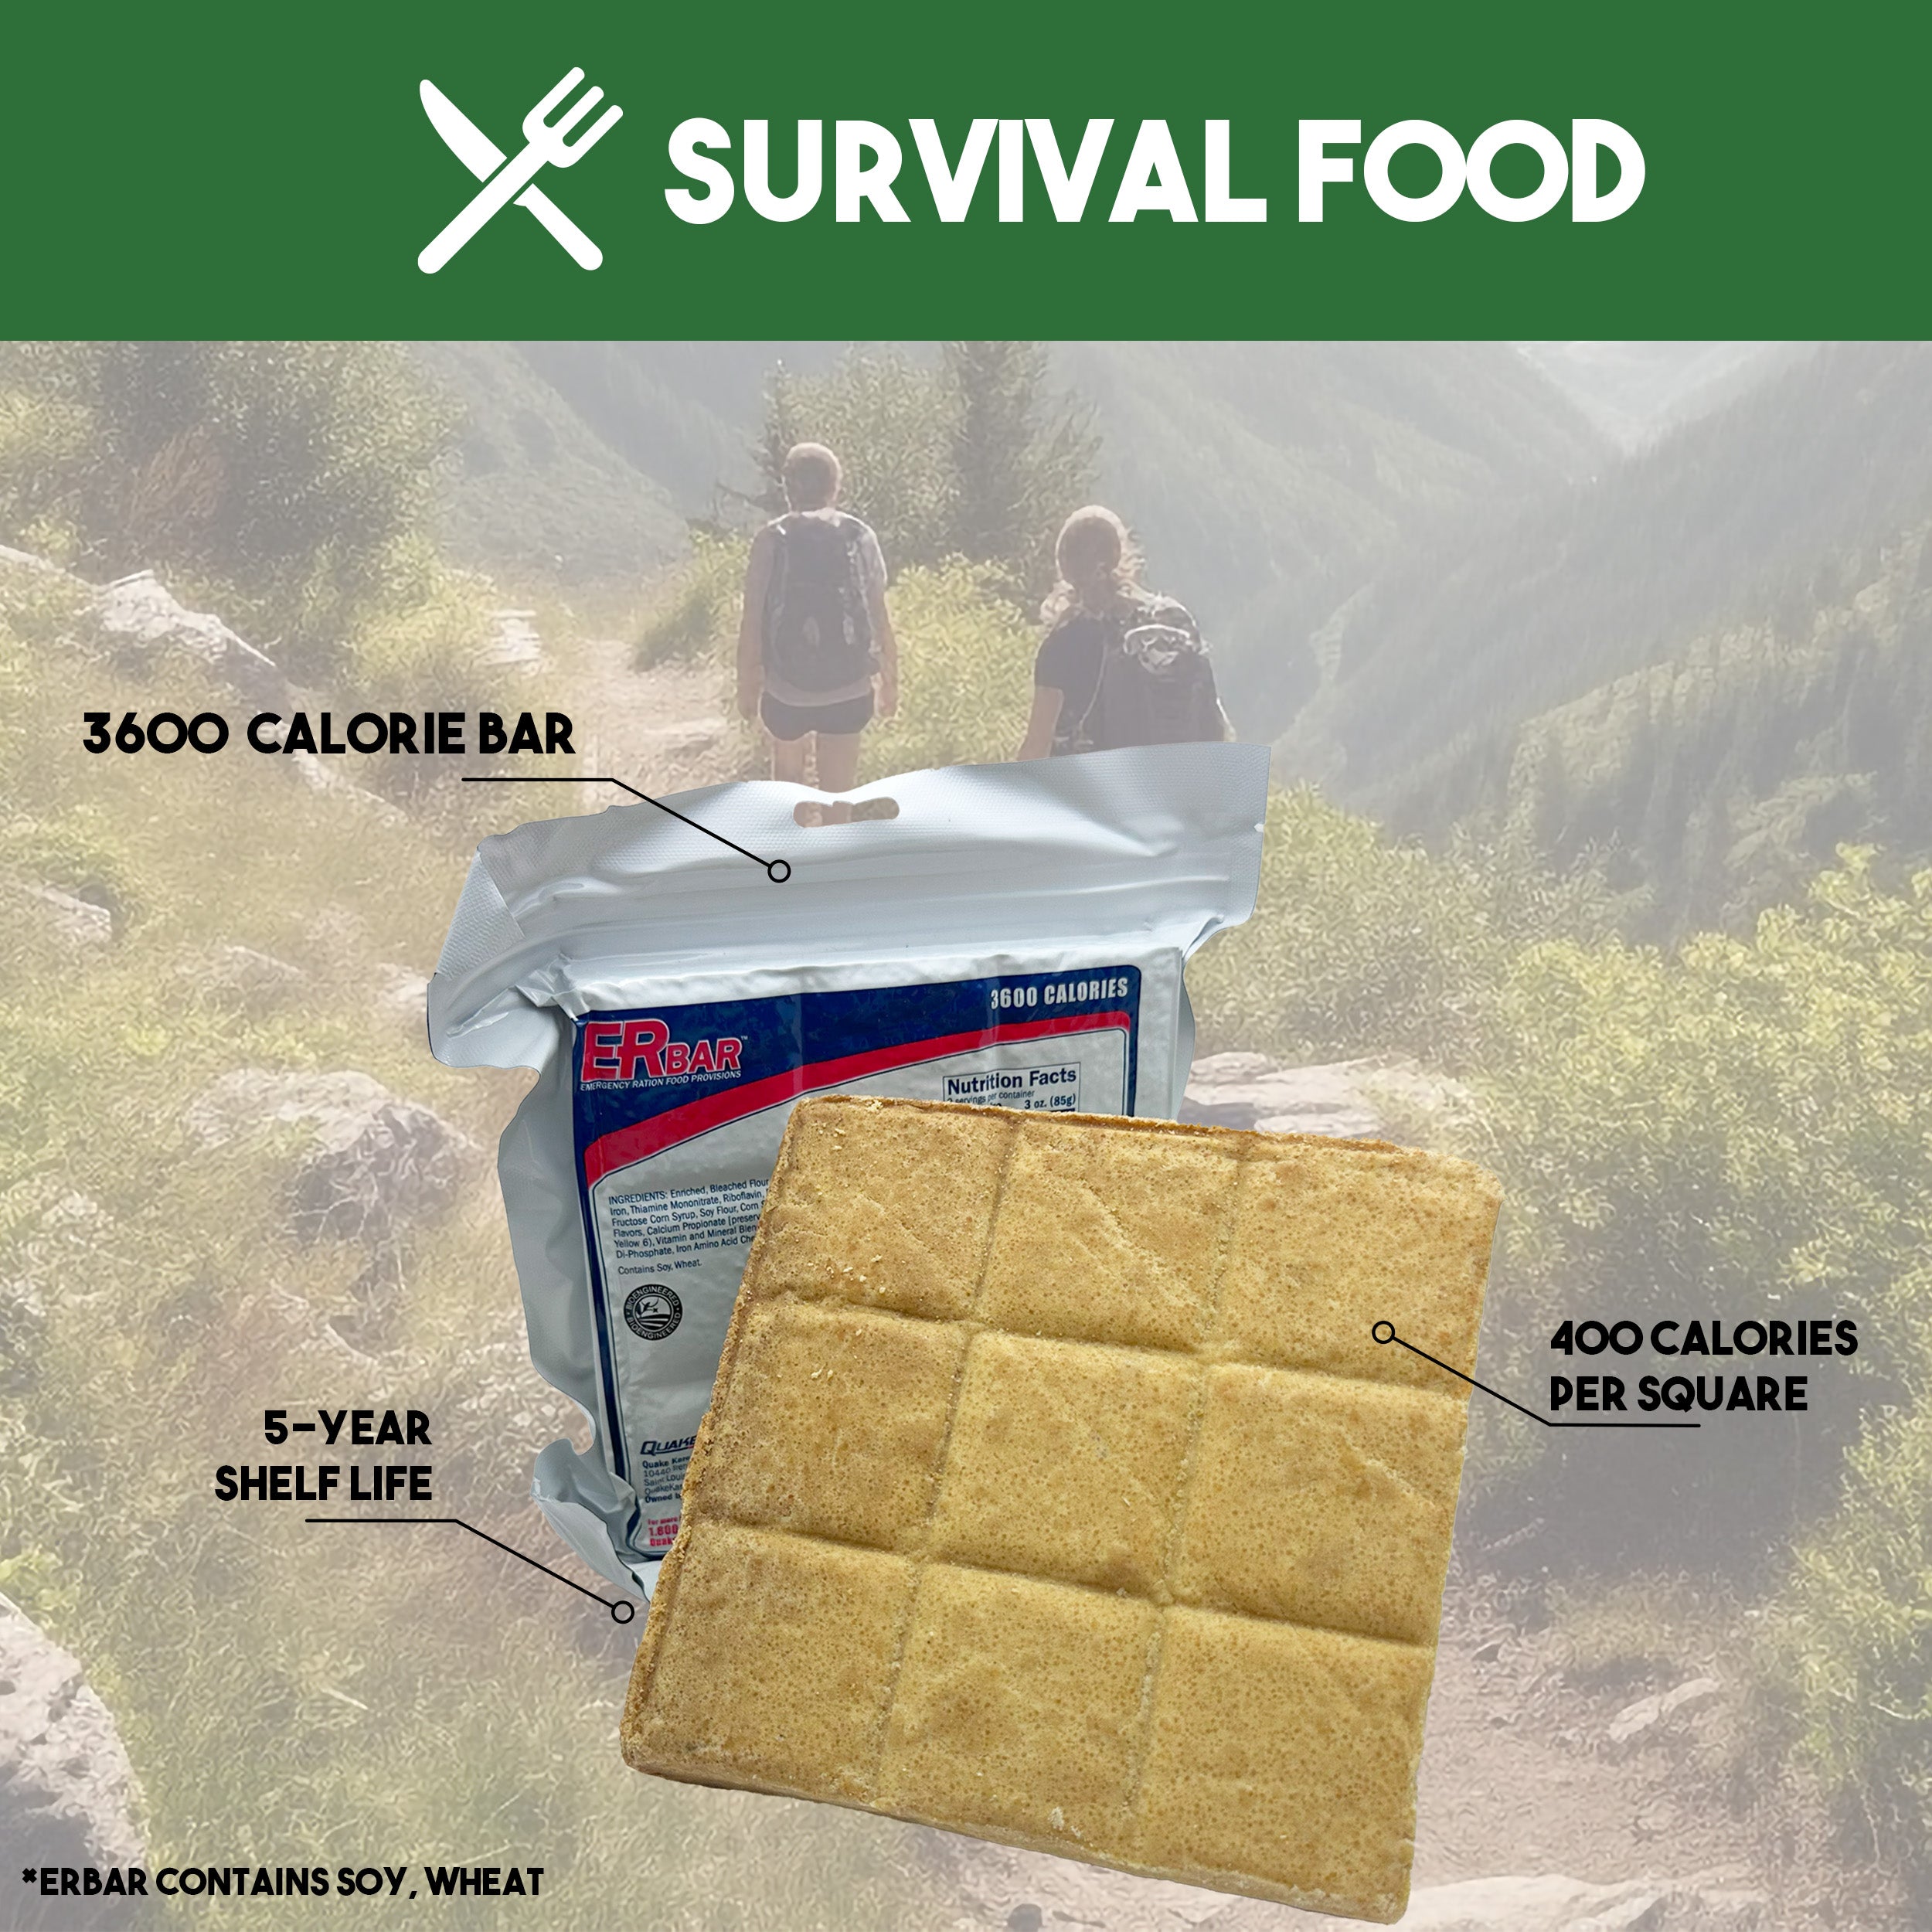 Denver Survival ELITE 72 Hour Survival Bag with Camping Supplies